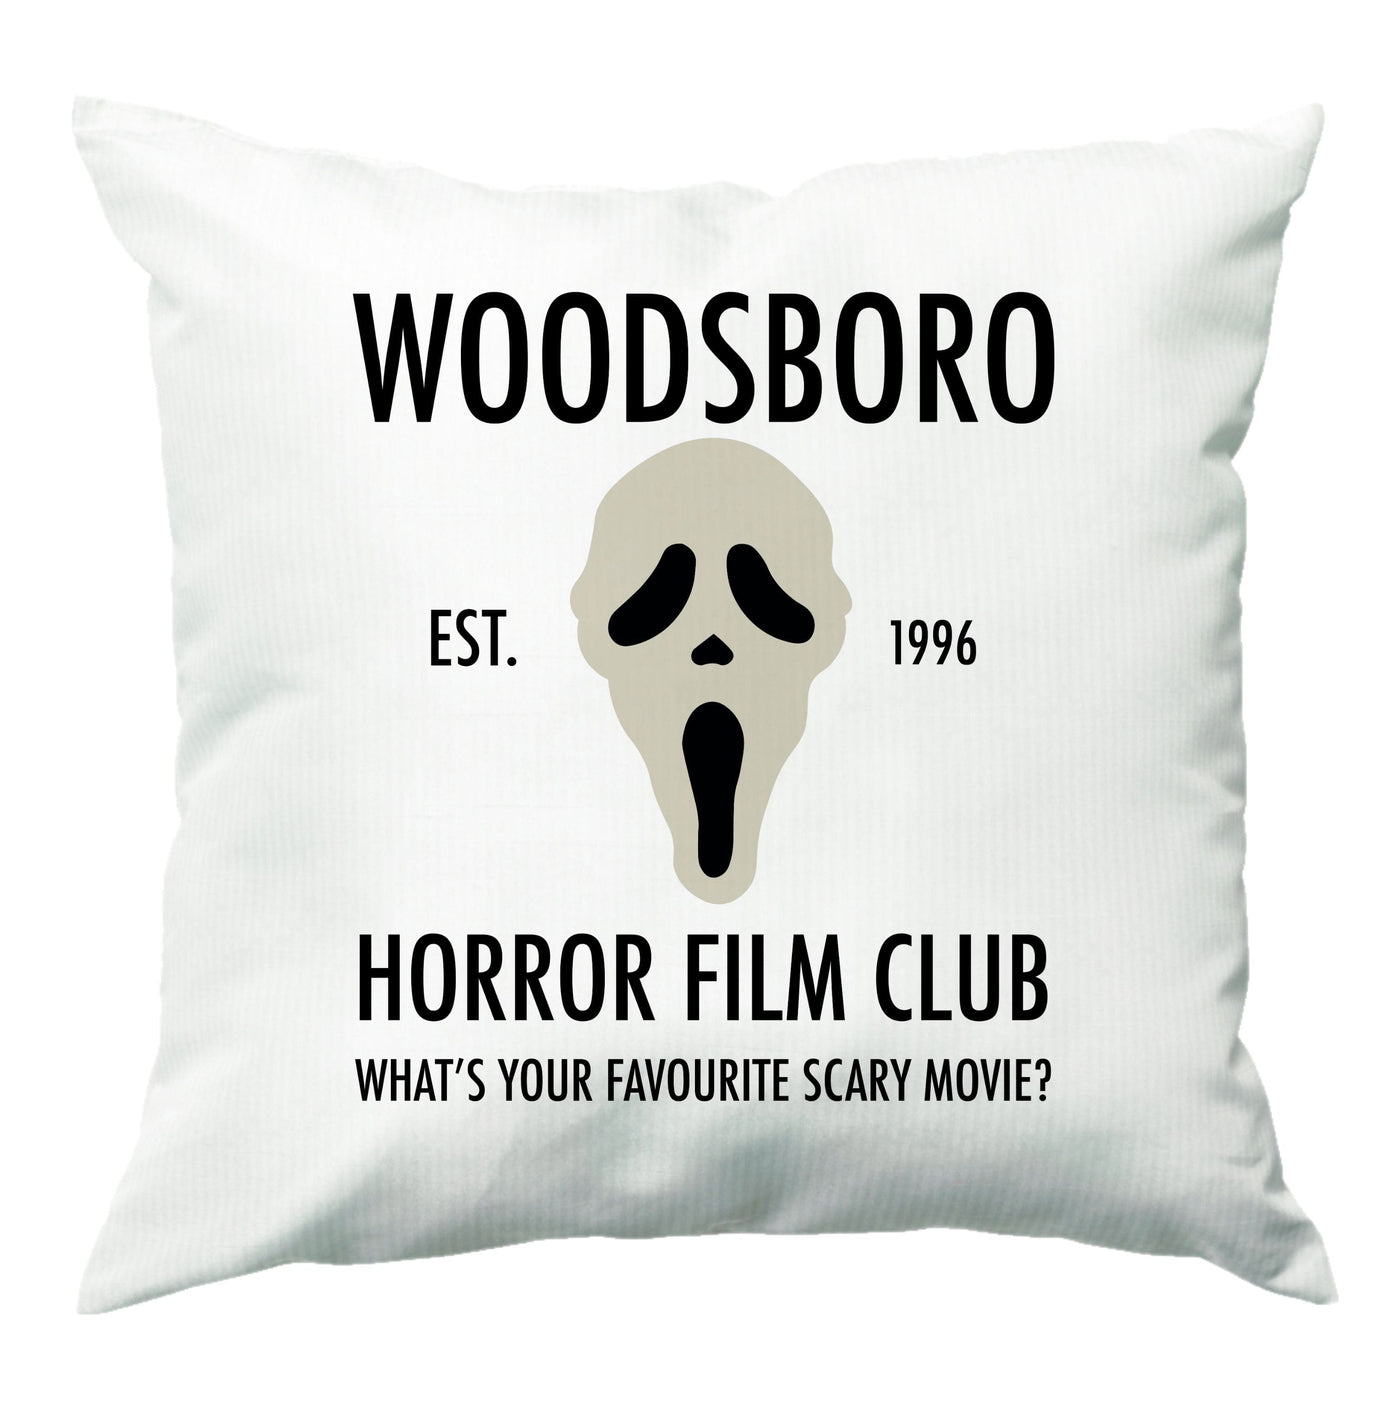 Woodsboro Horror Film Club - Scream Cushion